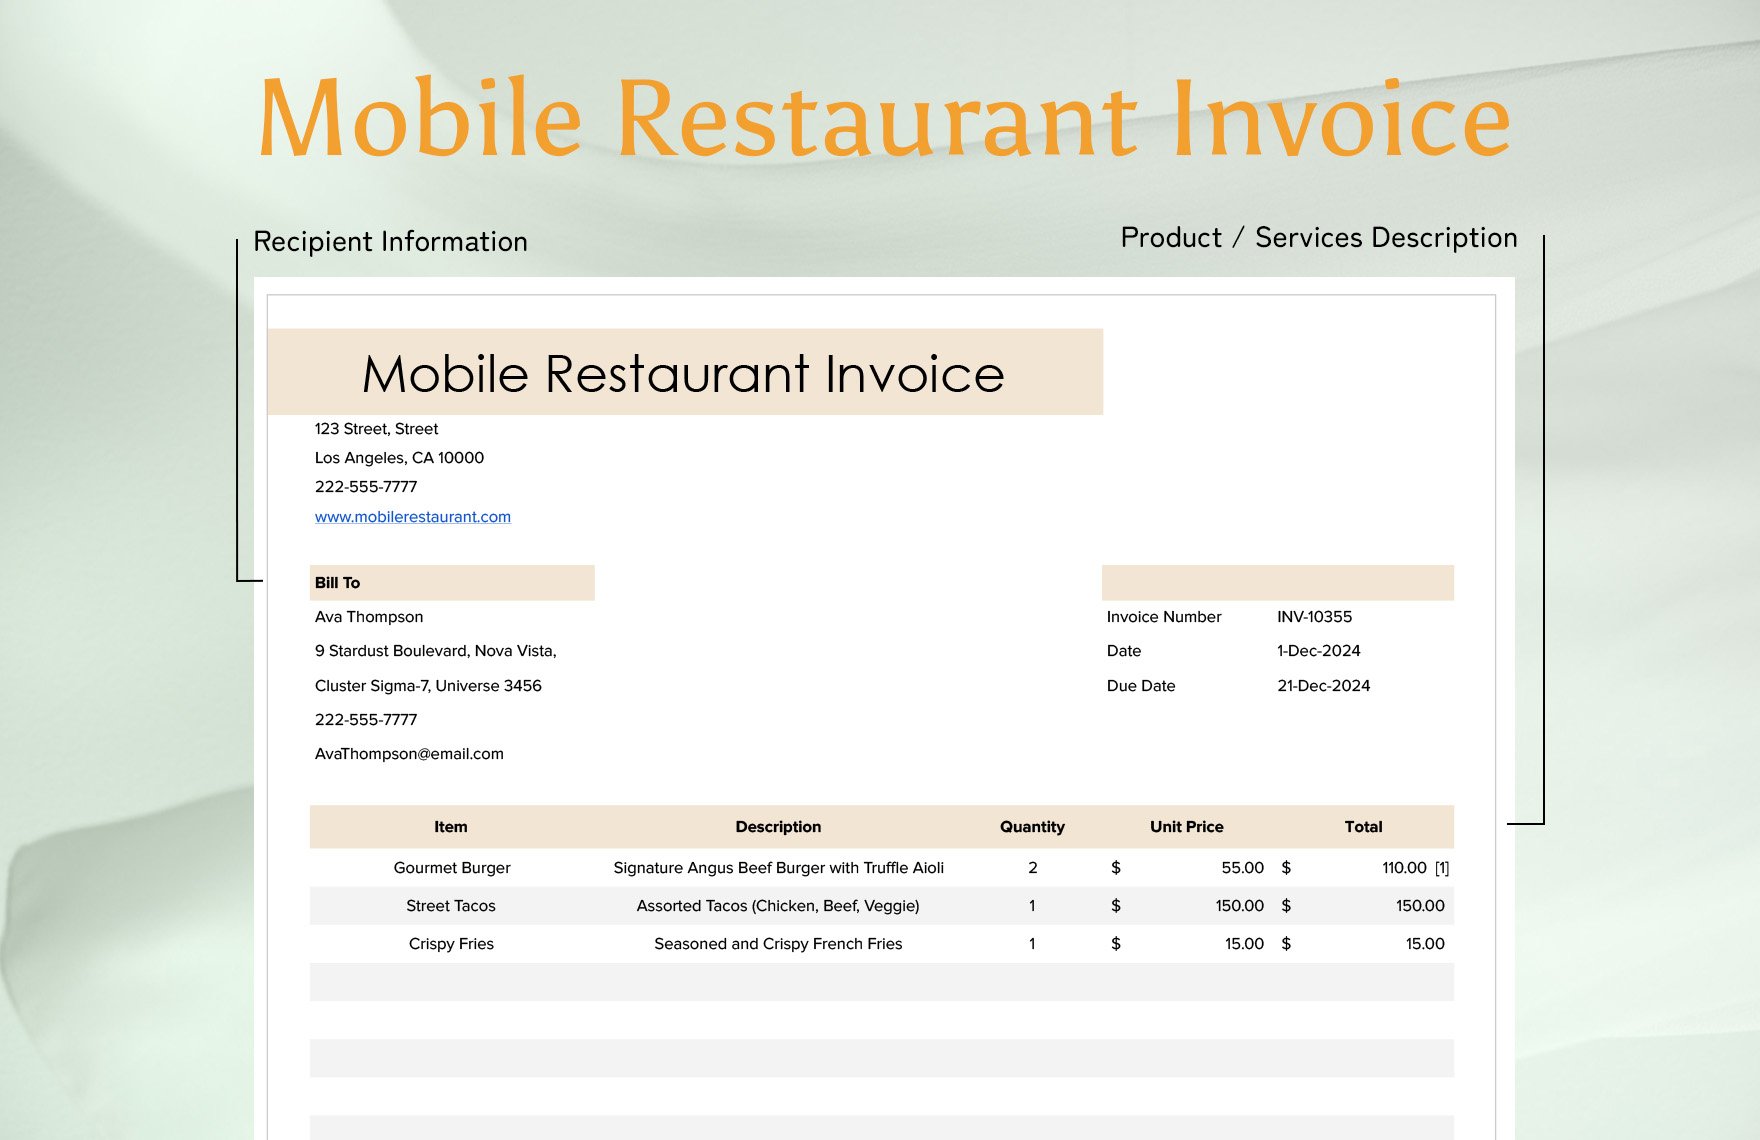 Mobile Restaurant Invoice Template